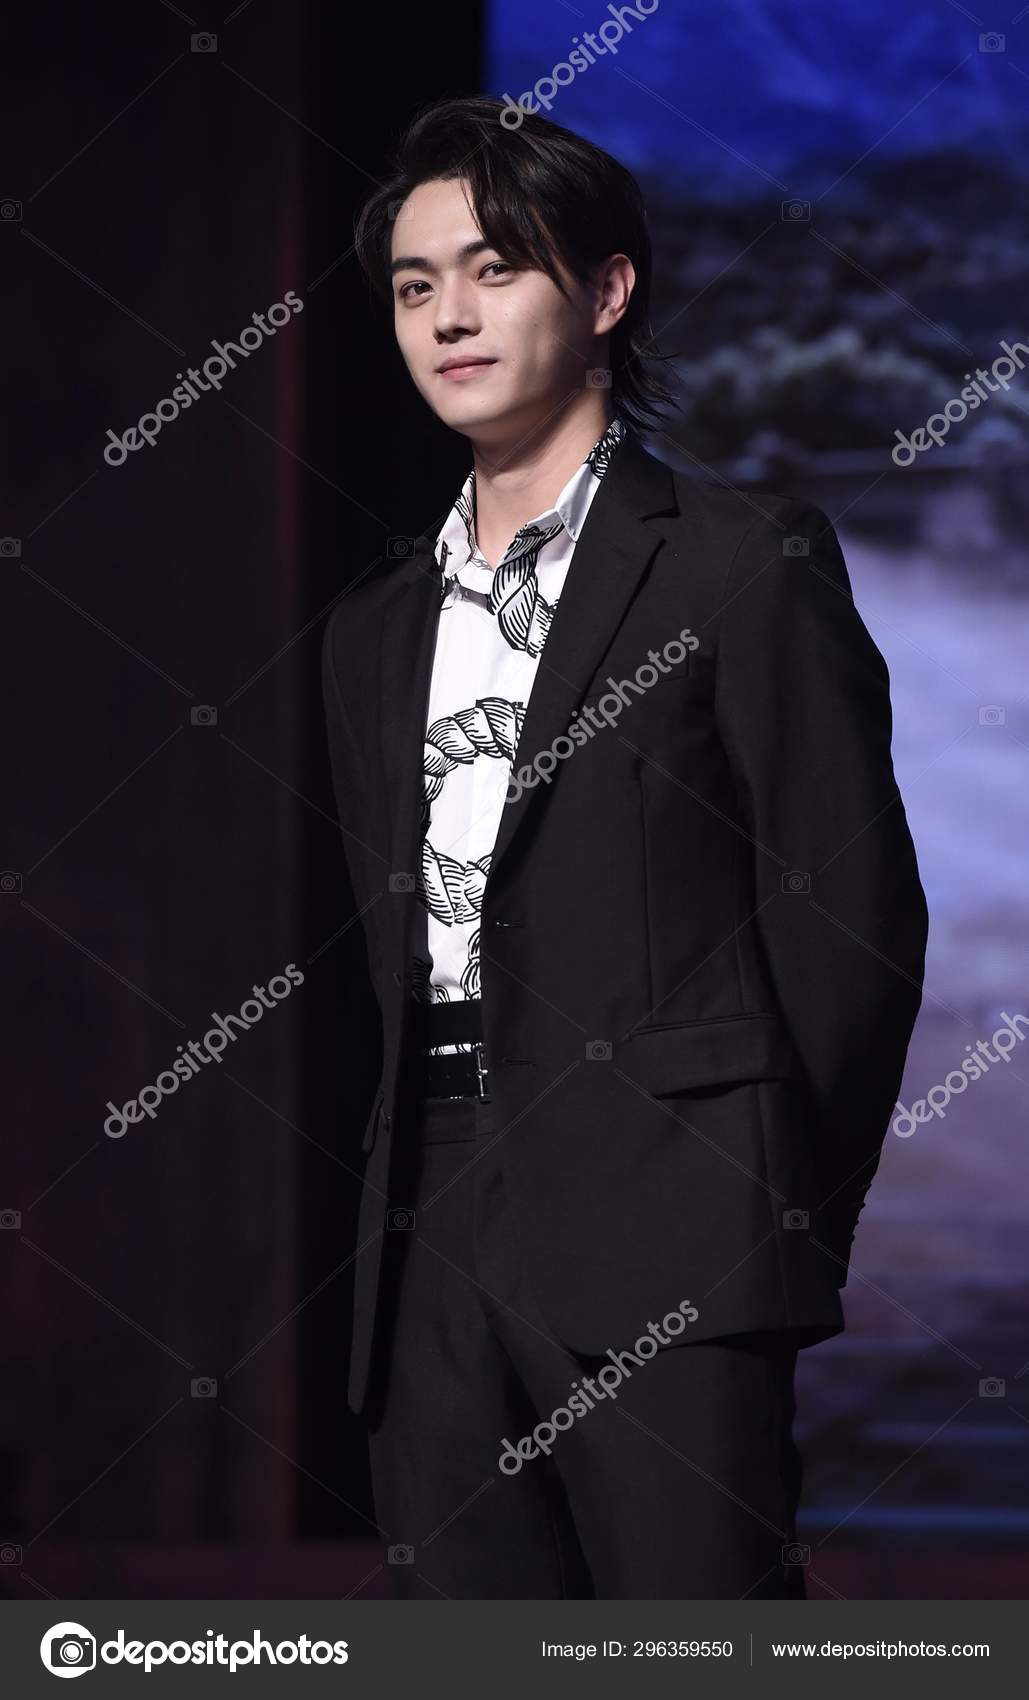 Chinese rapper and singer Zhou Zhennan of idol boy band R1SE